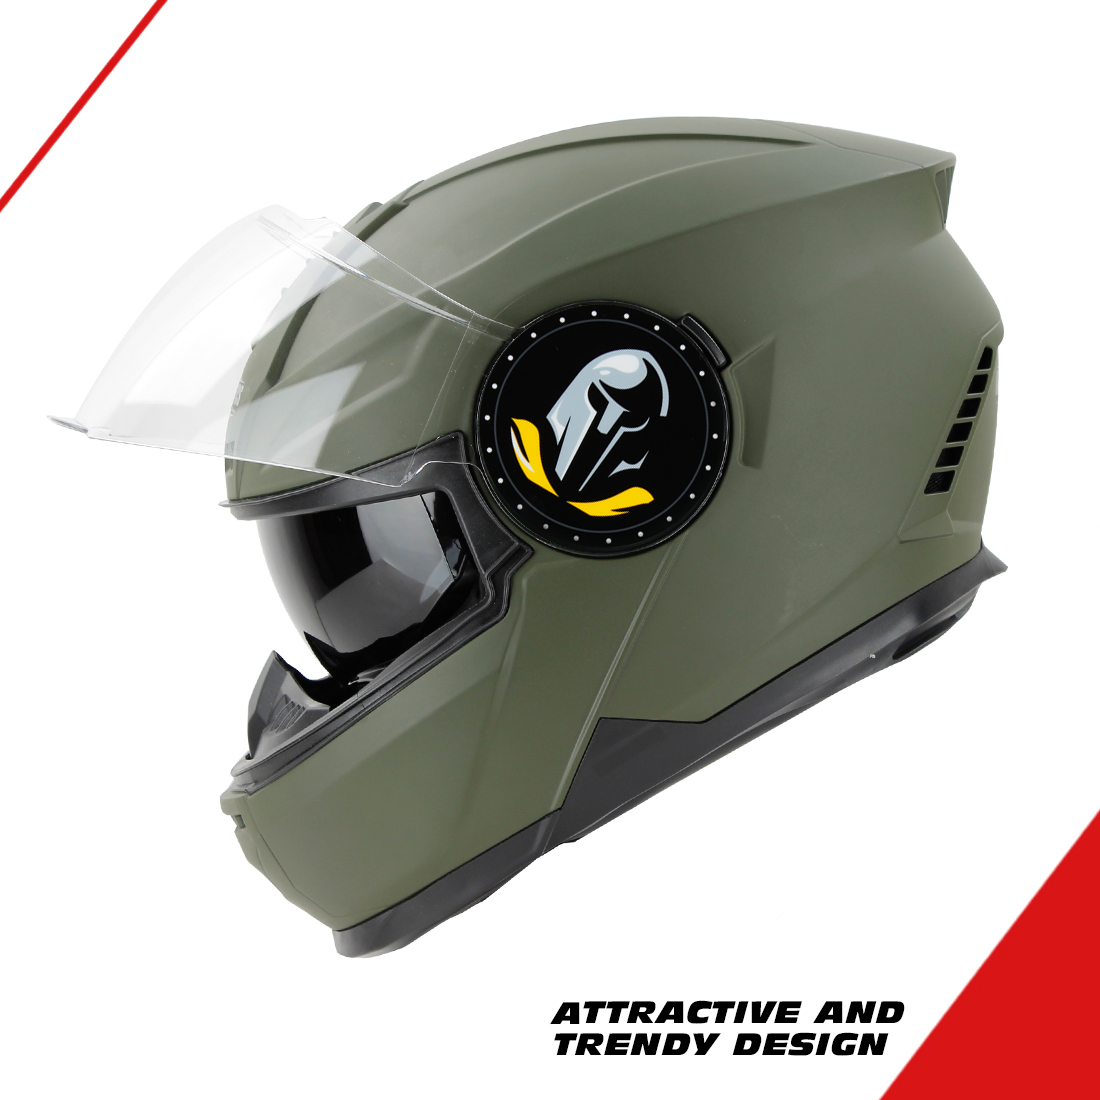 Steelbird SBH-40 ISI Certified Full Face Helmet For Men And Women With Inner Smoke Sun Shield (Matt Battle Green)